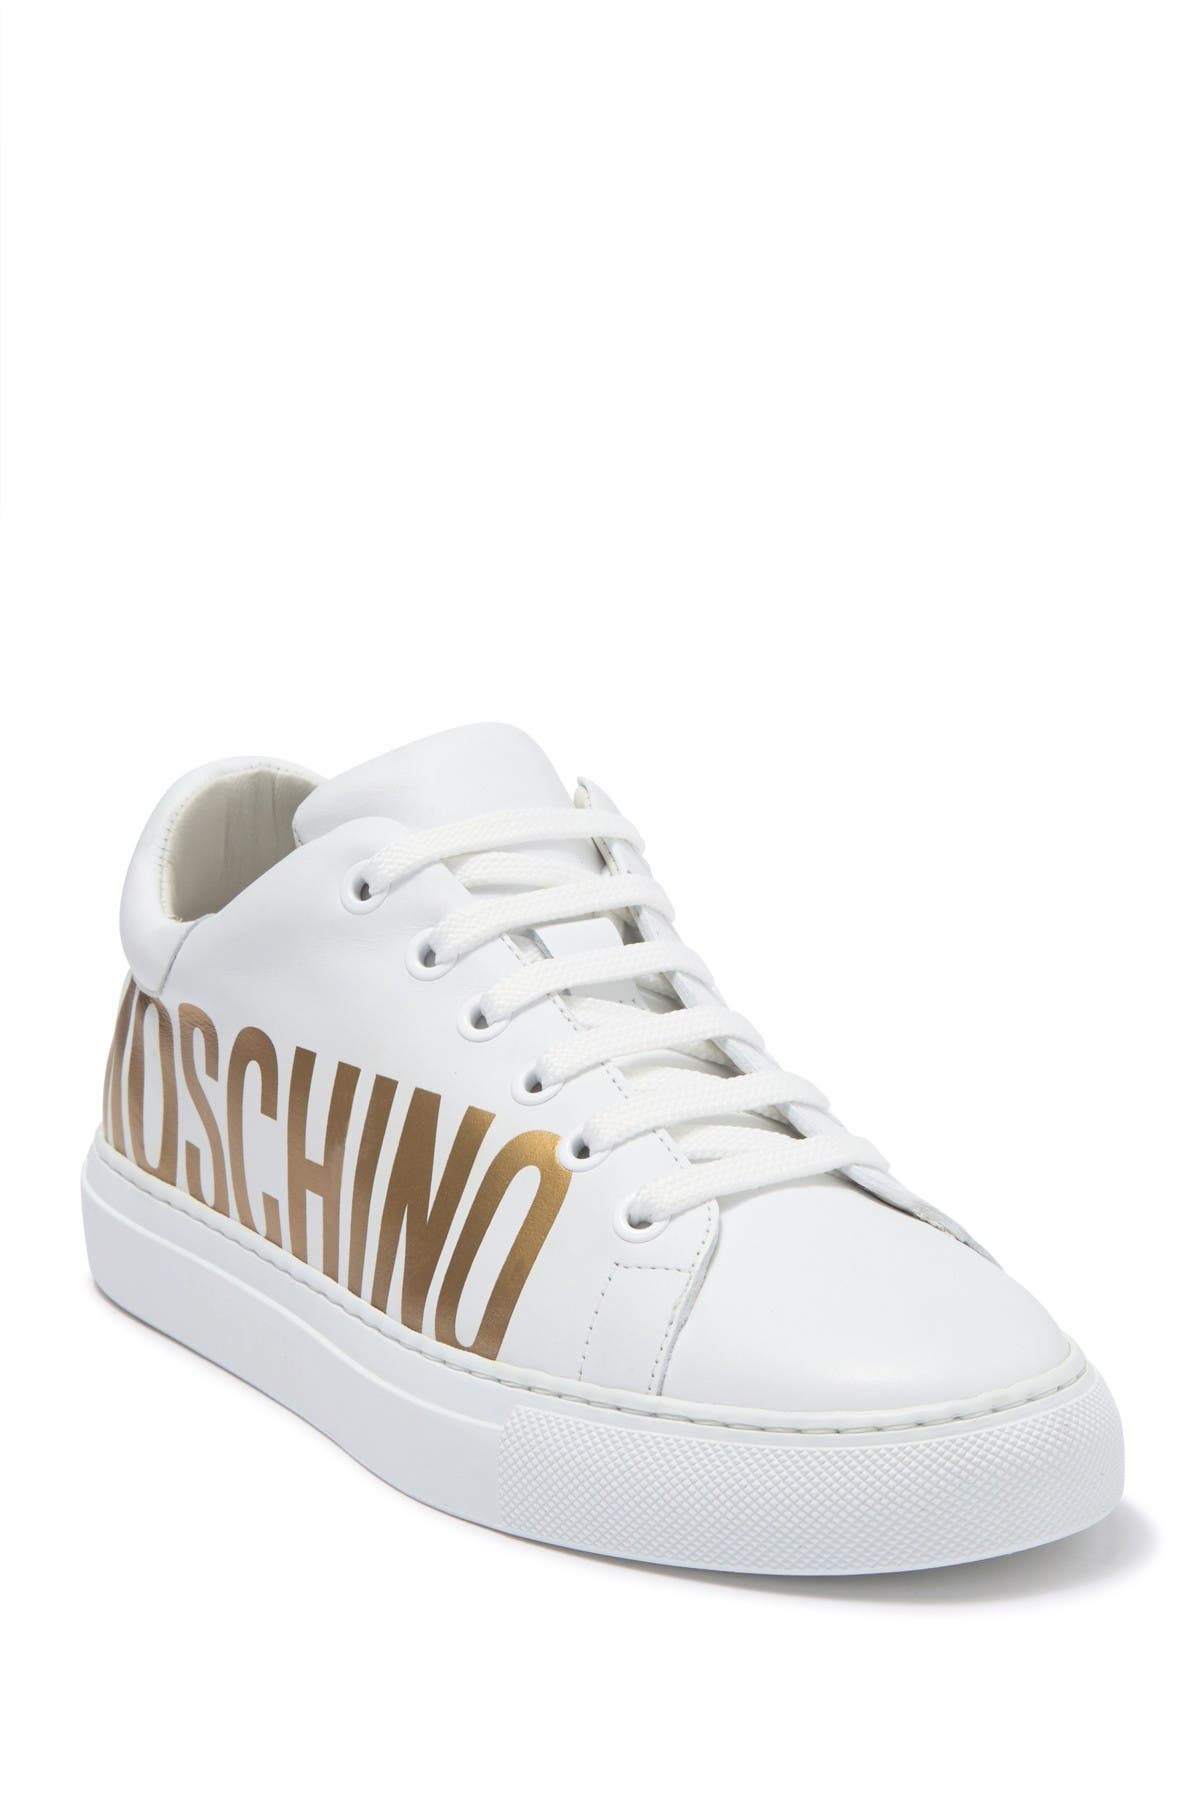 moschino logo sneakers